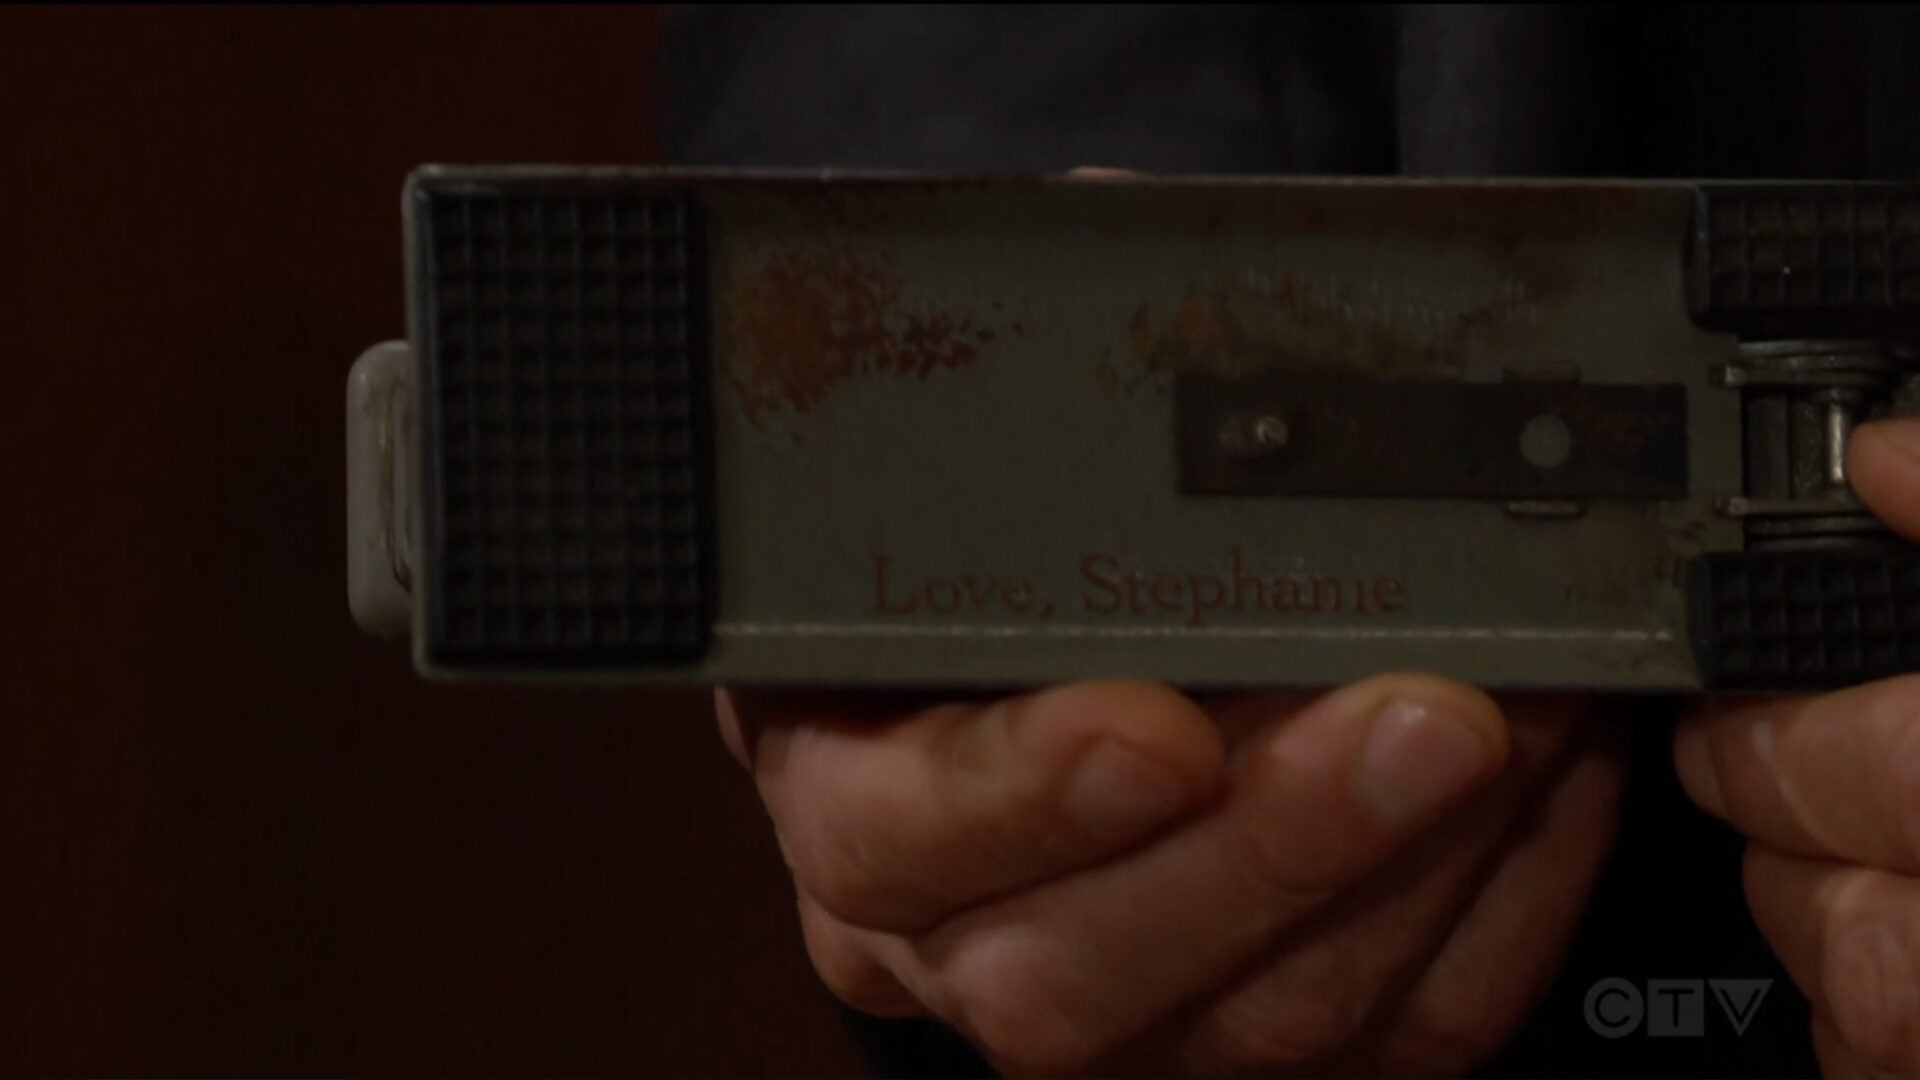 eric's stapler with stephanie's name on it